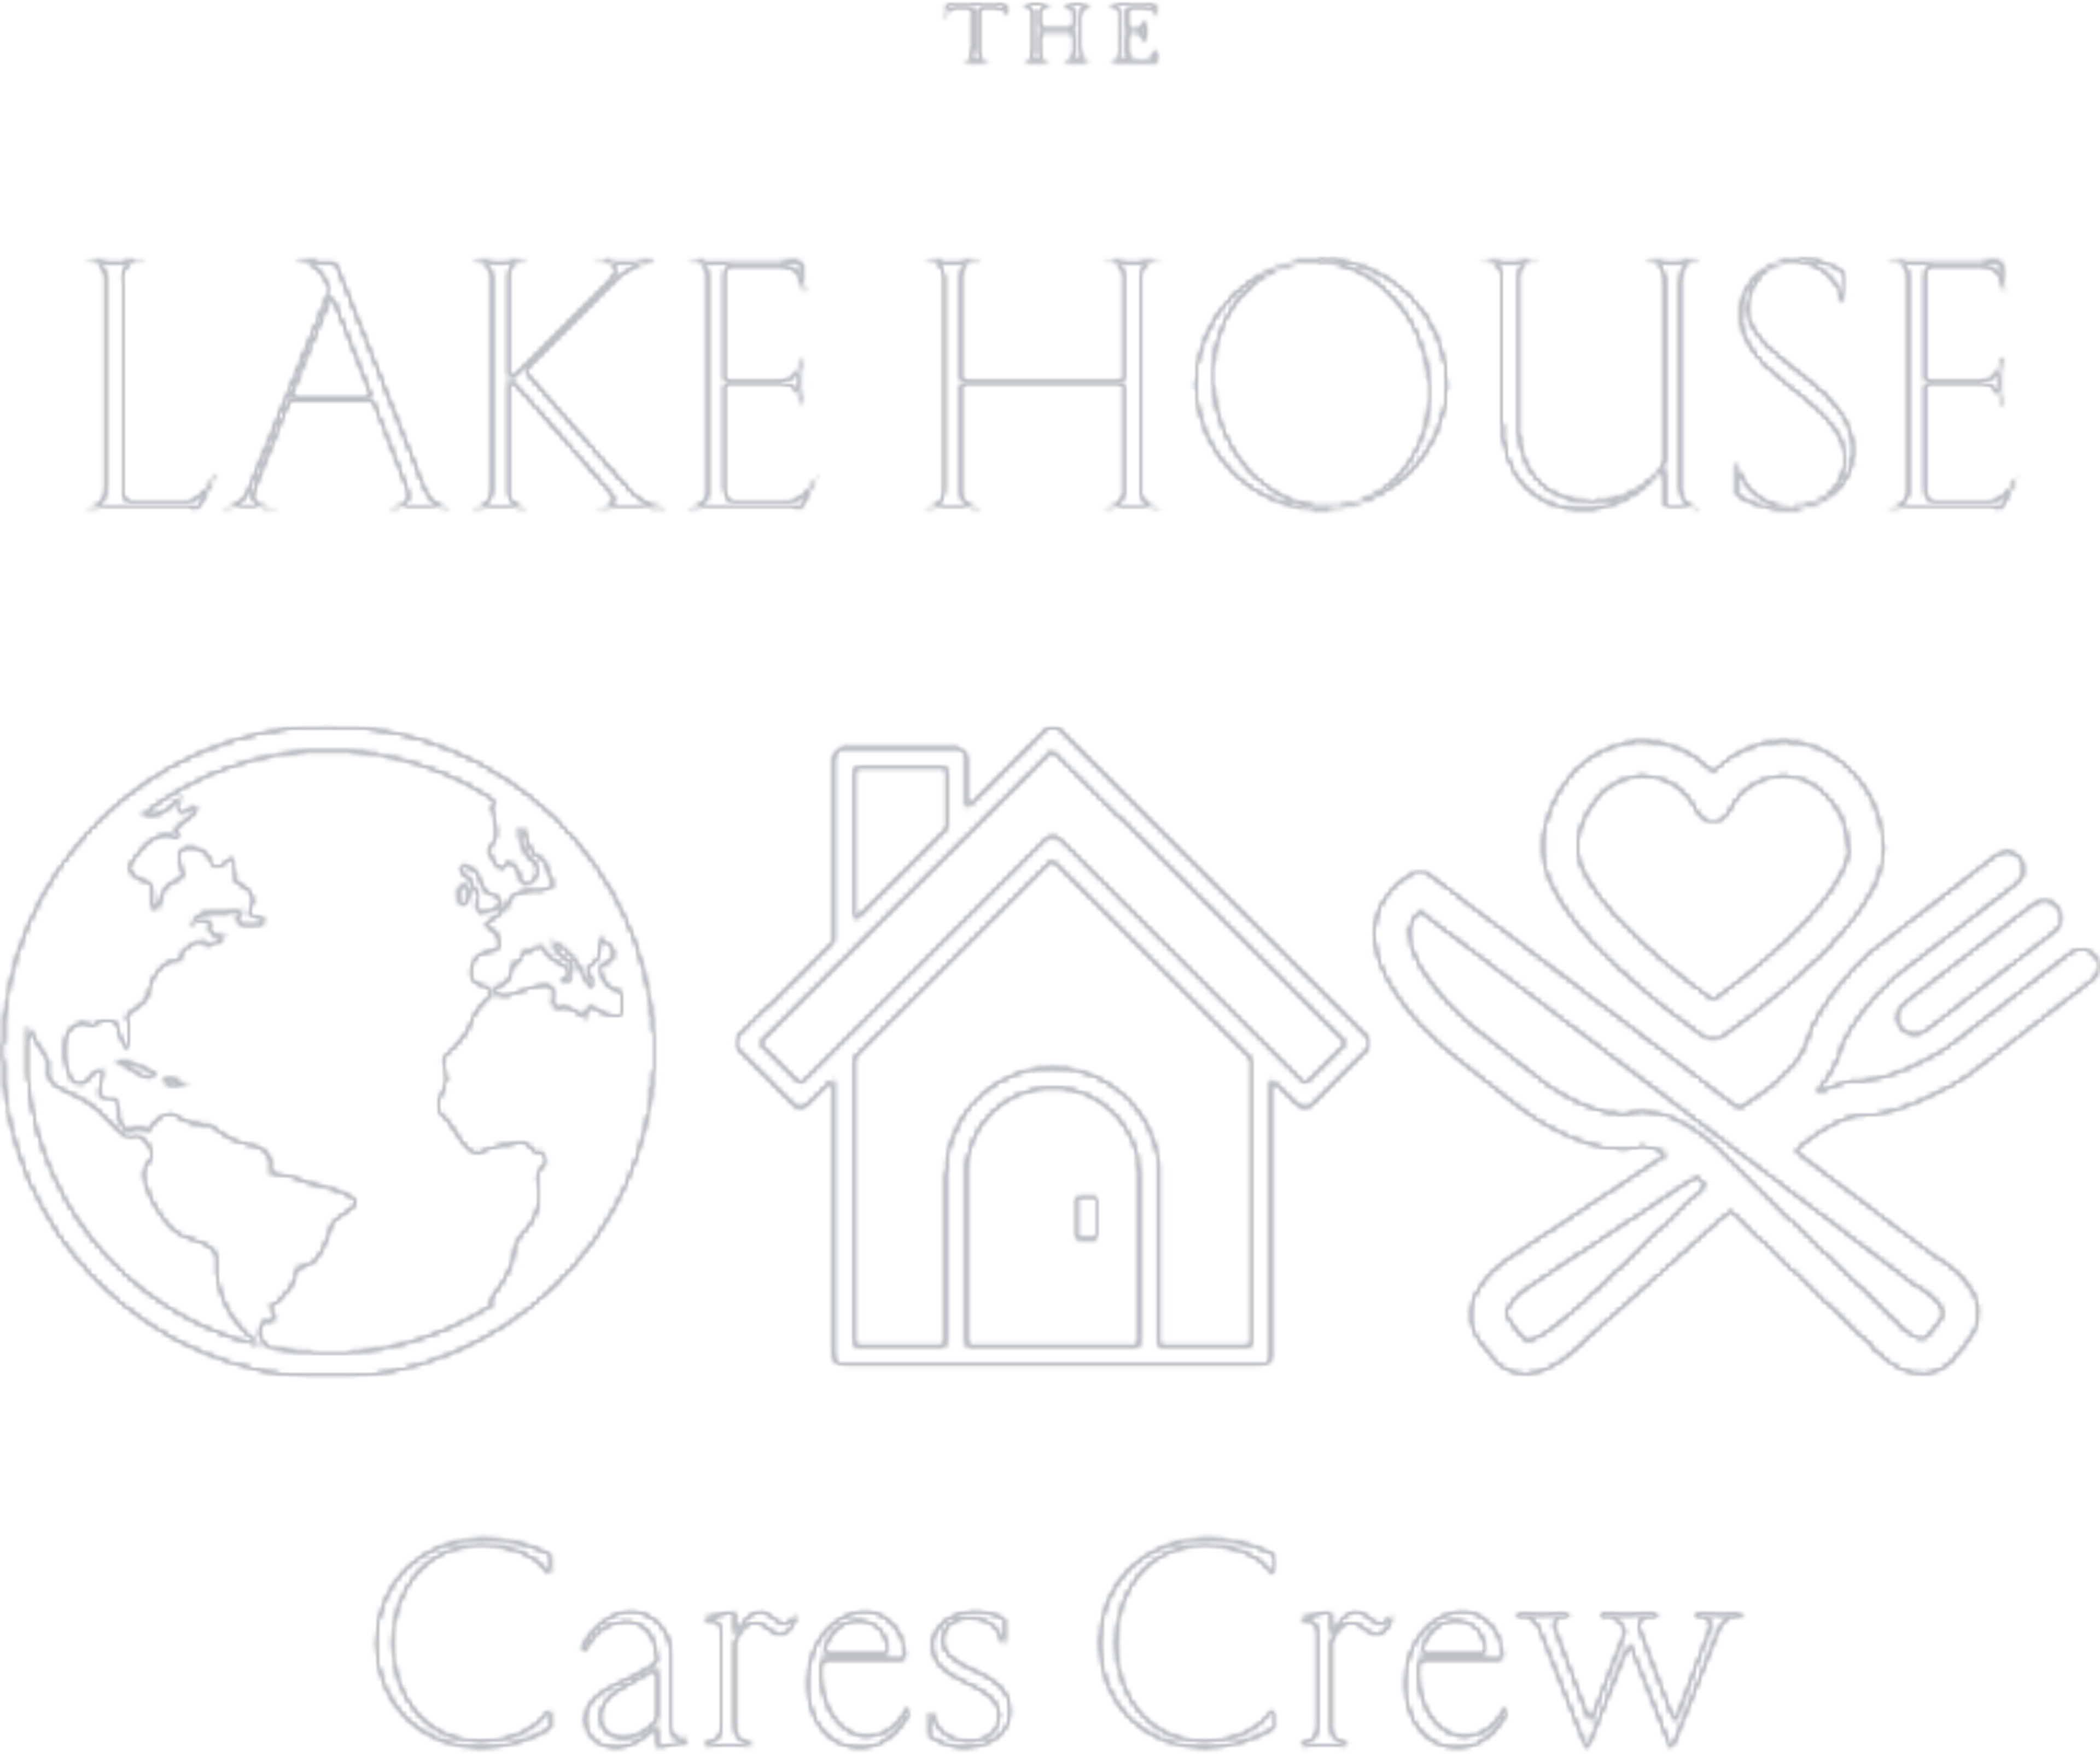 The Lakehouse Cares Crew